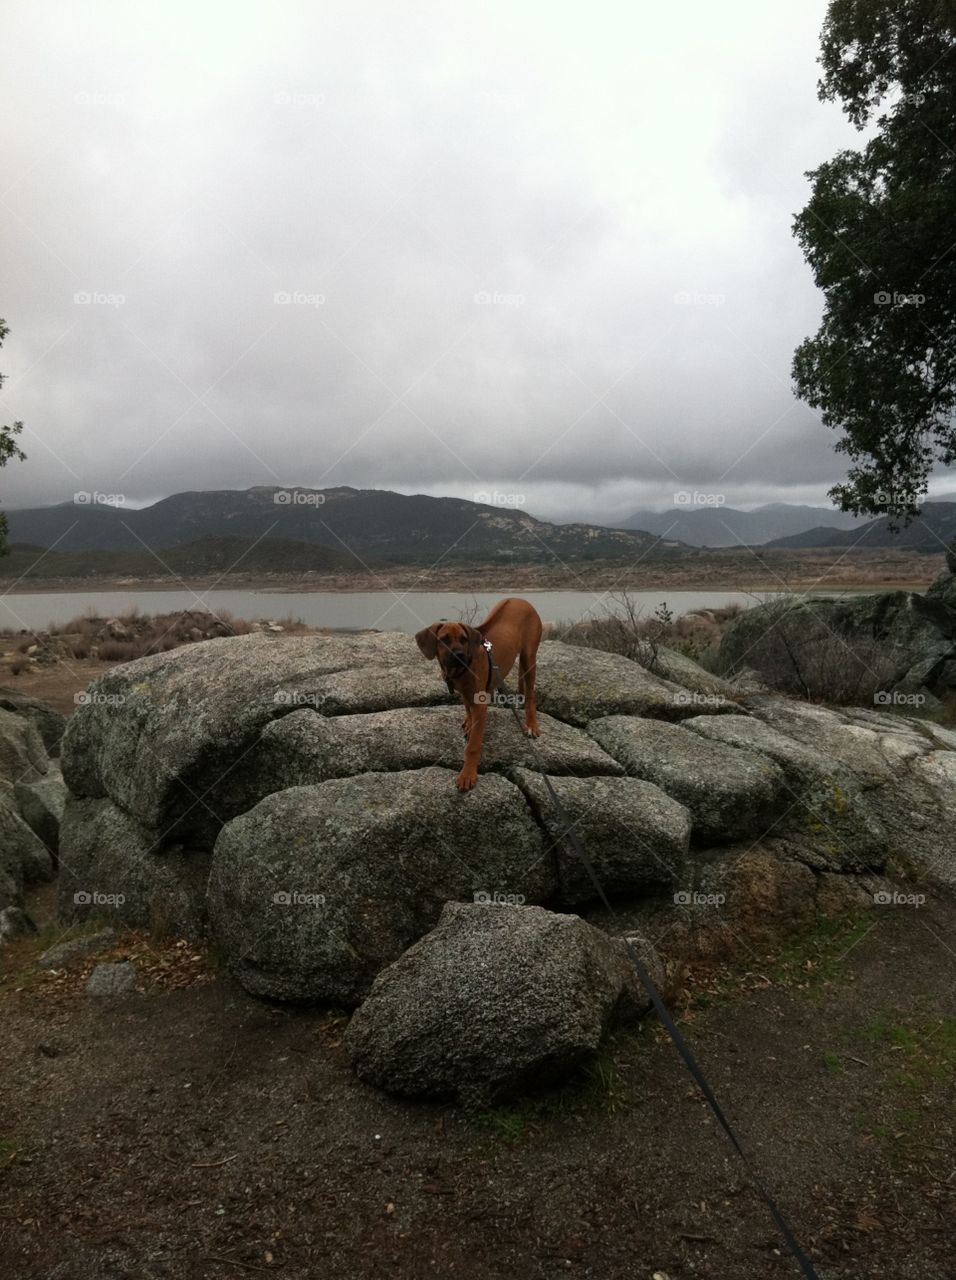 Zuri on big rocks. My dog Zuri on rocks at the lake